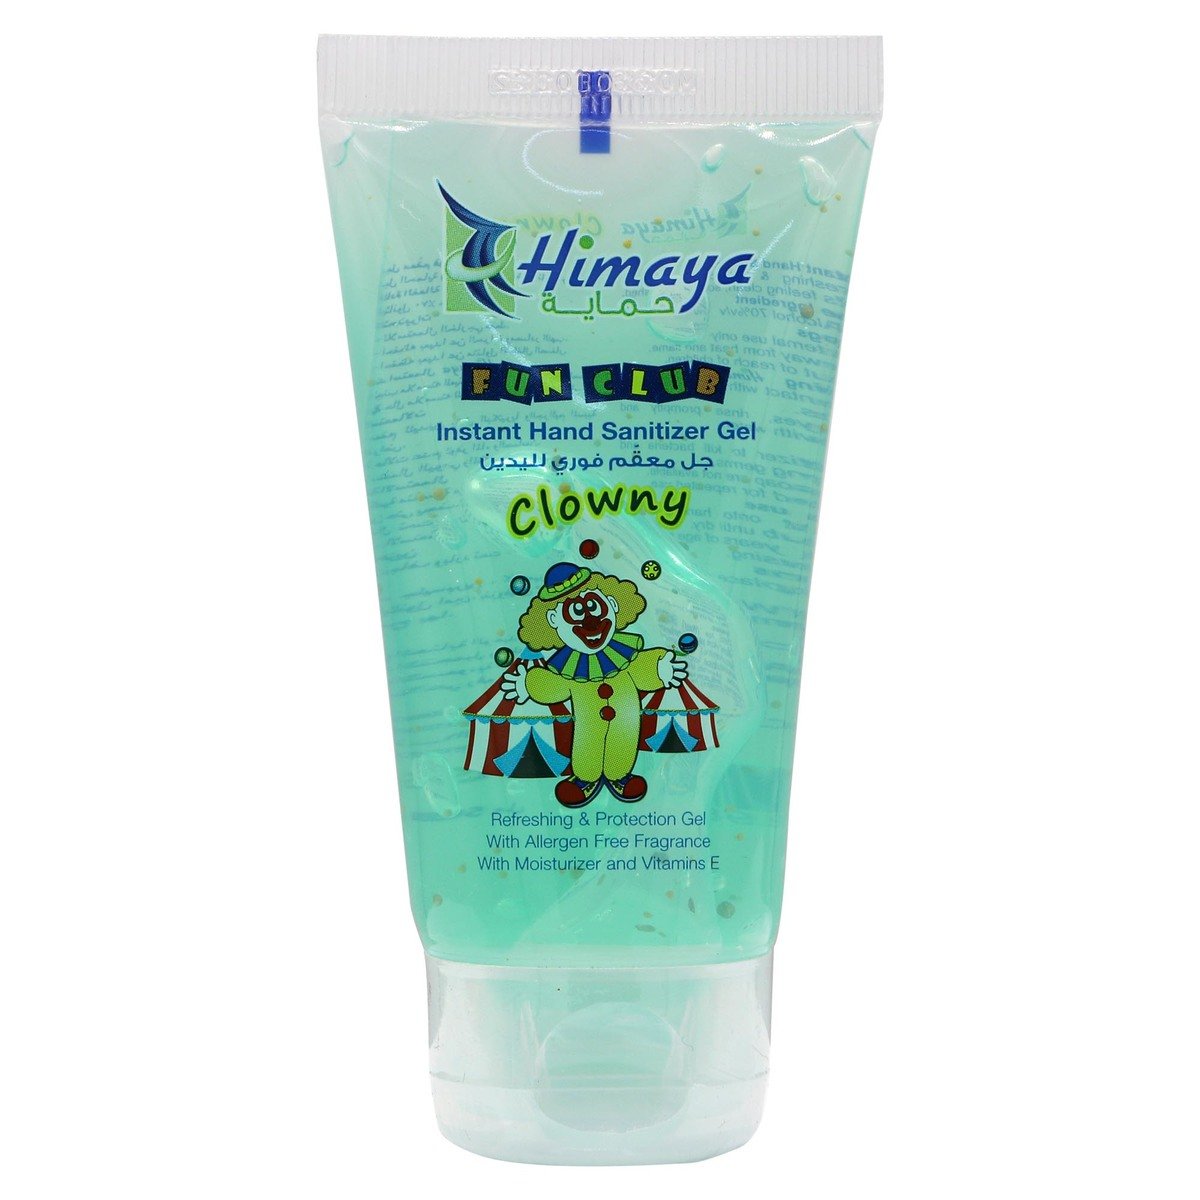 Himaya Instant Hand Sanitizer Gel Fun Club Clowny 50ml